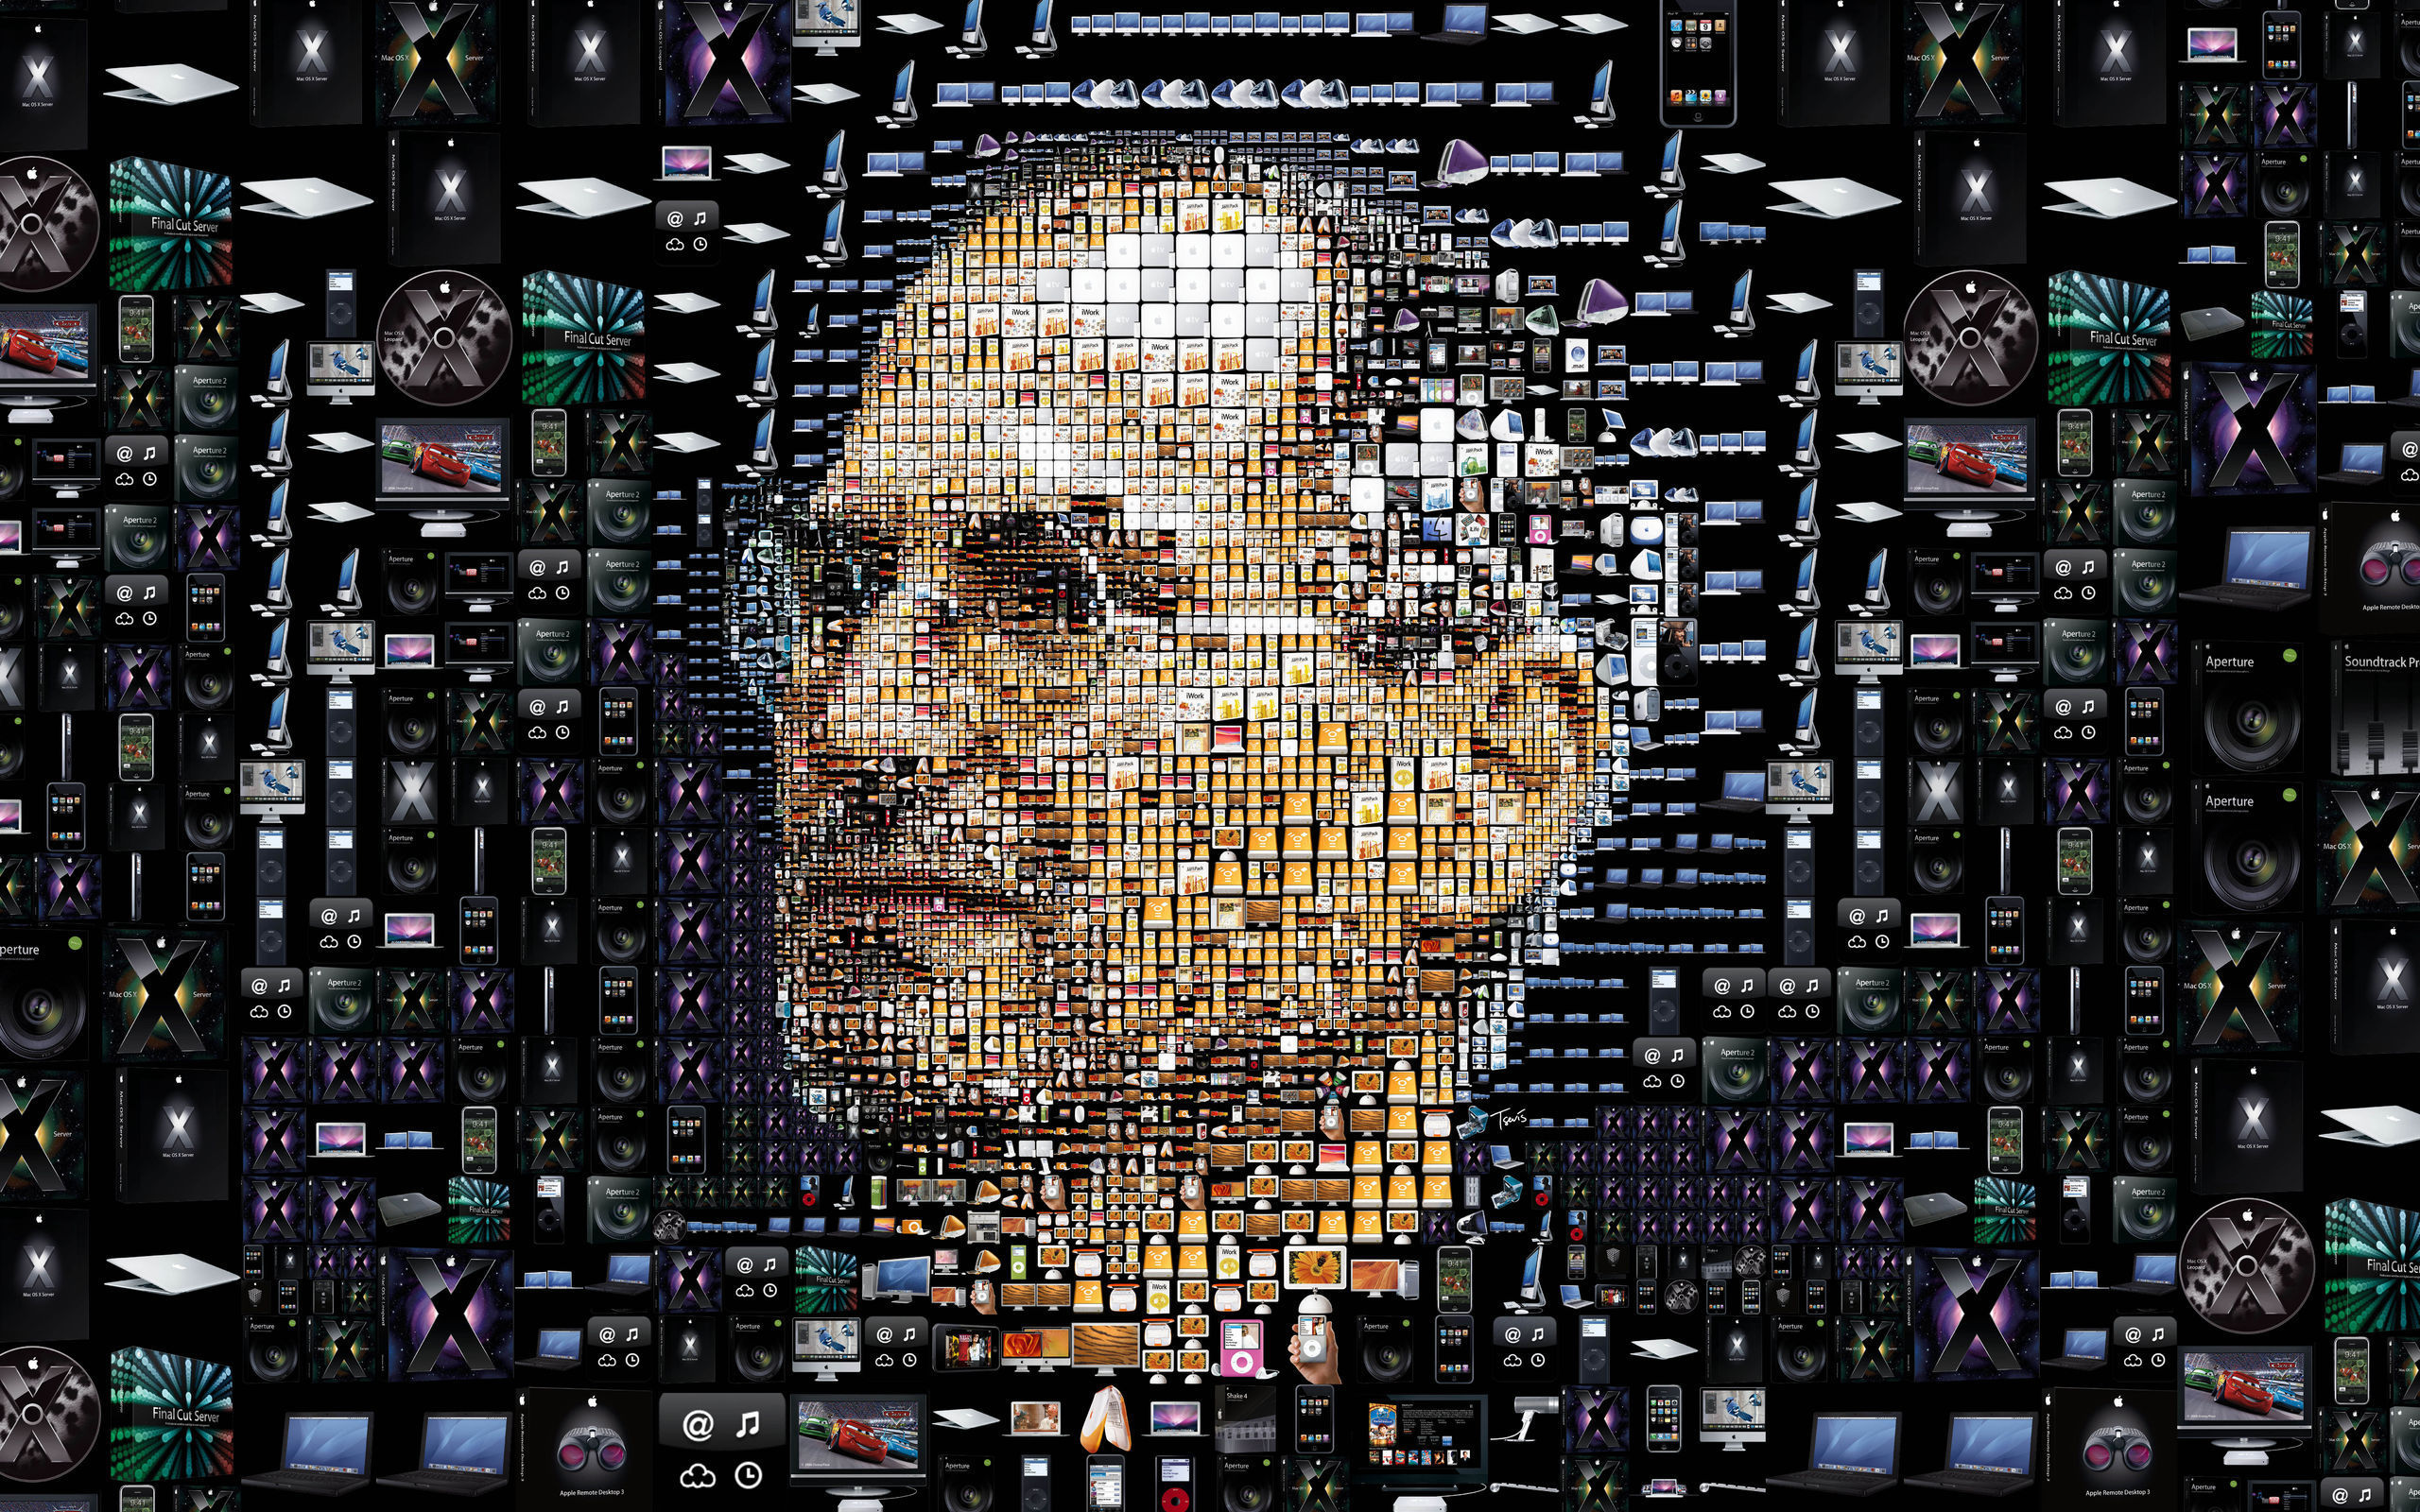 Steve Jobs 2560x1600